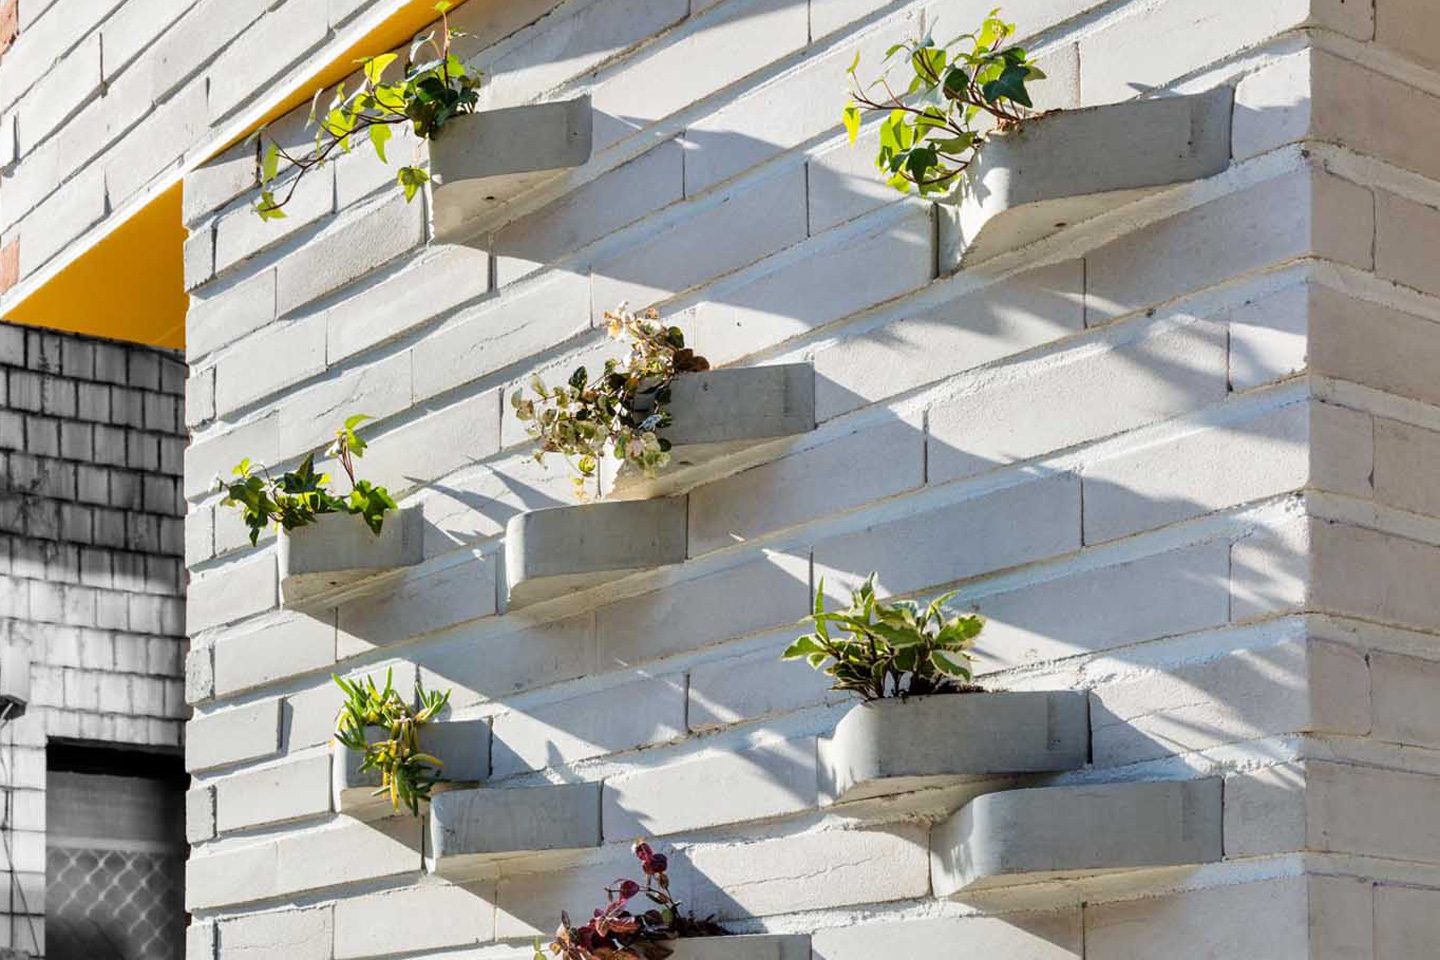 Creative brick design with a built-in planter turns the outer facade of this house into a vertical garden!